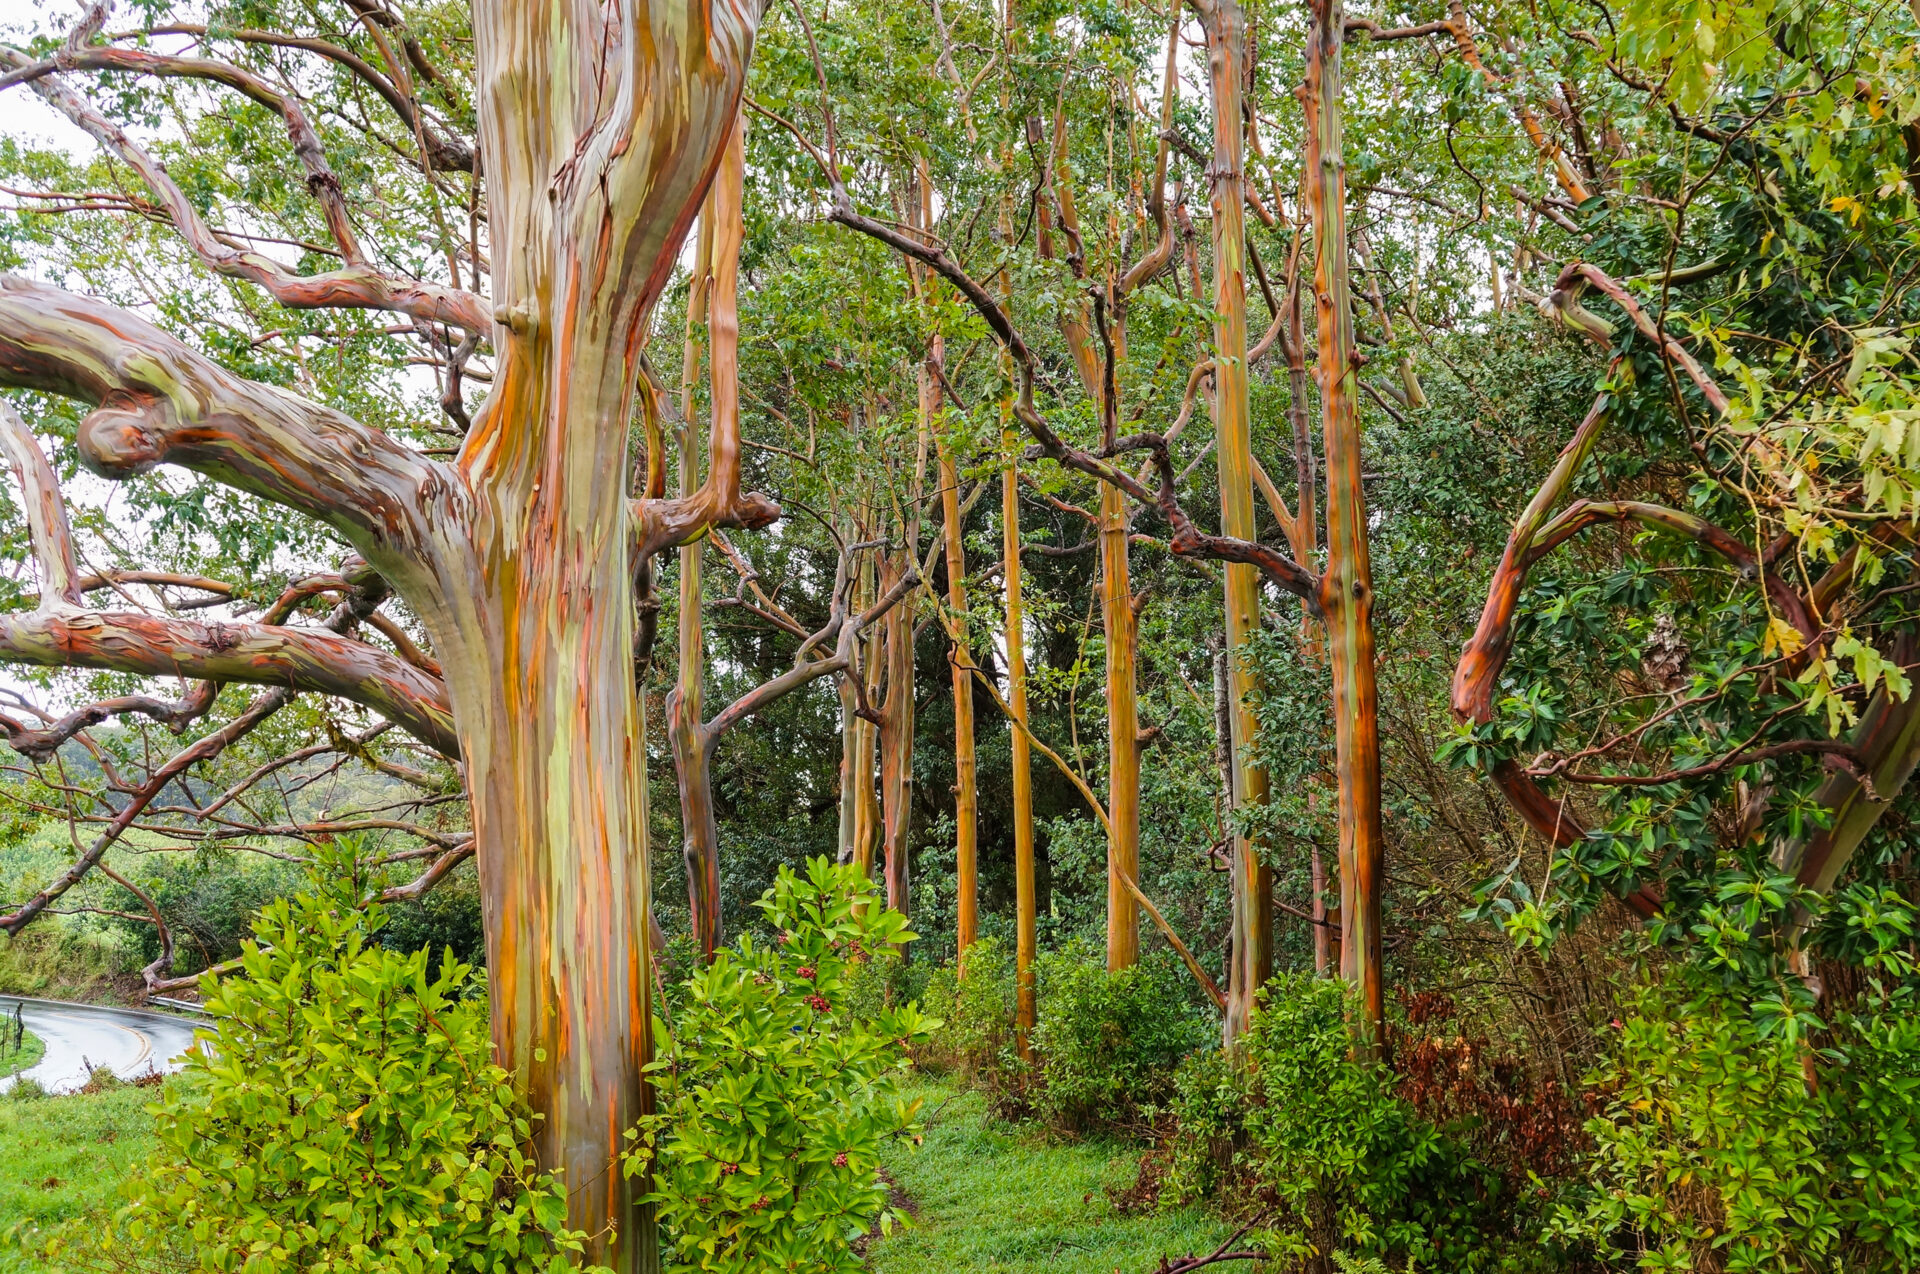 Rainbow eucalyptus trees on the Road to Hana, Maui.